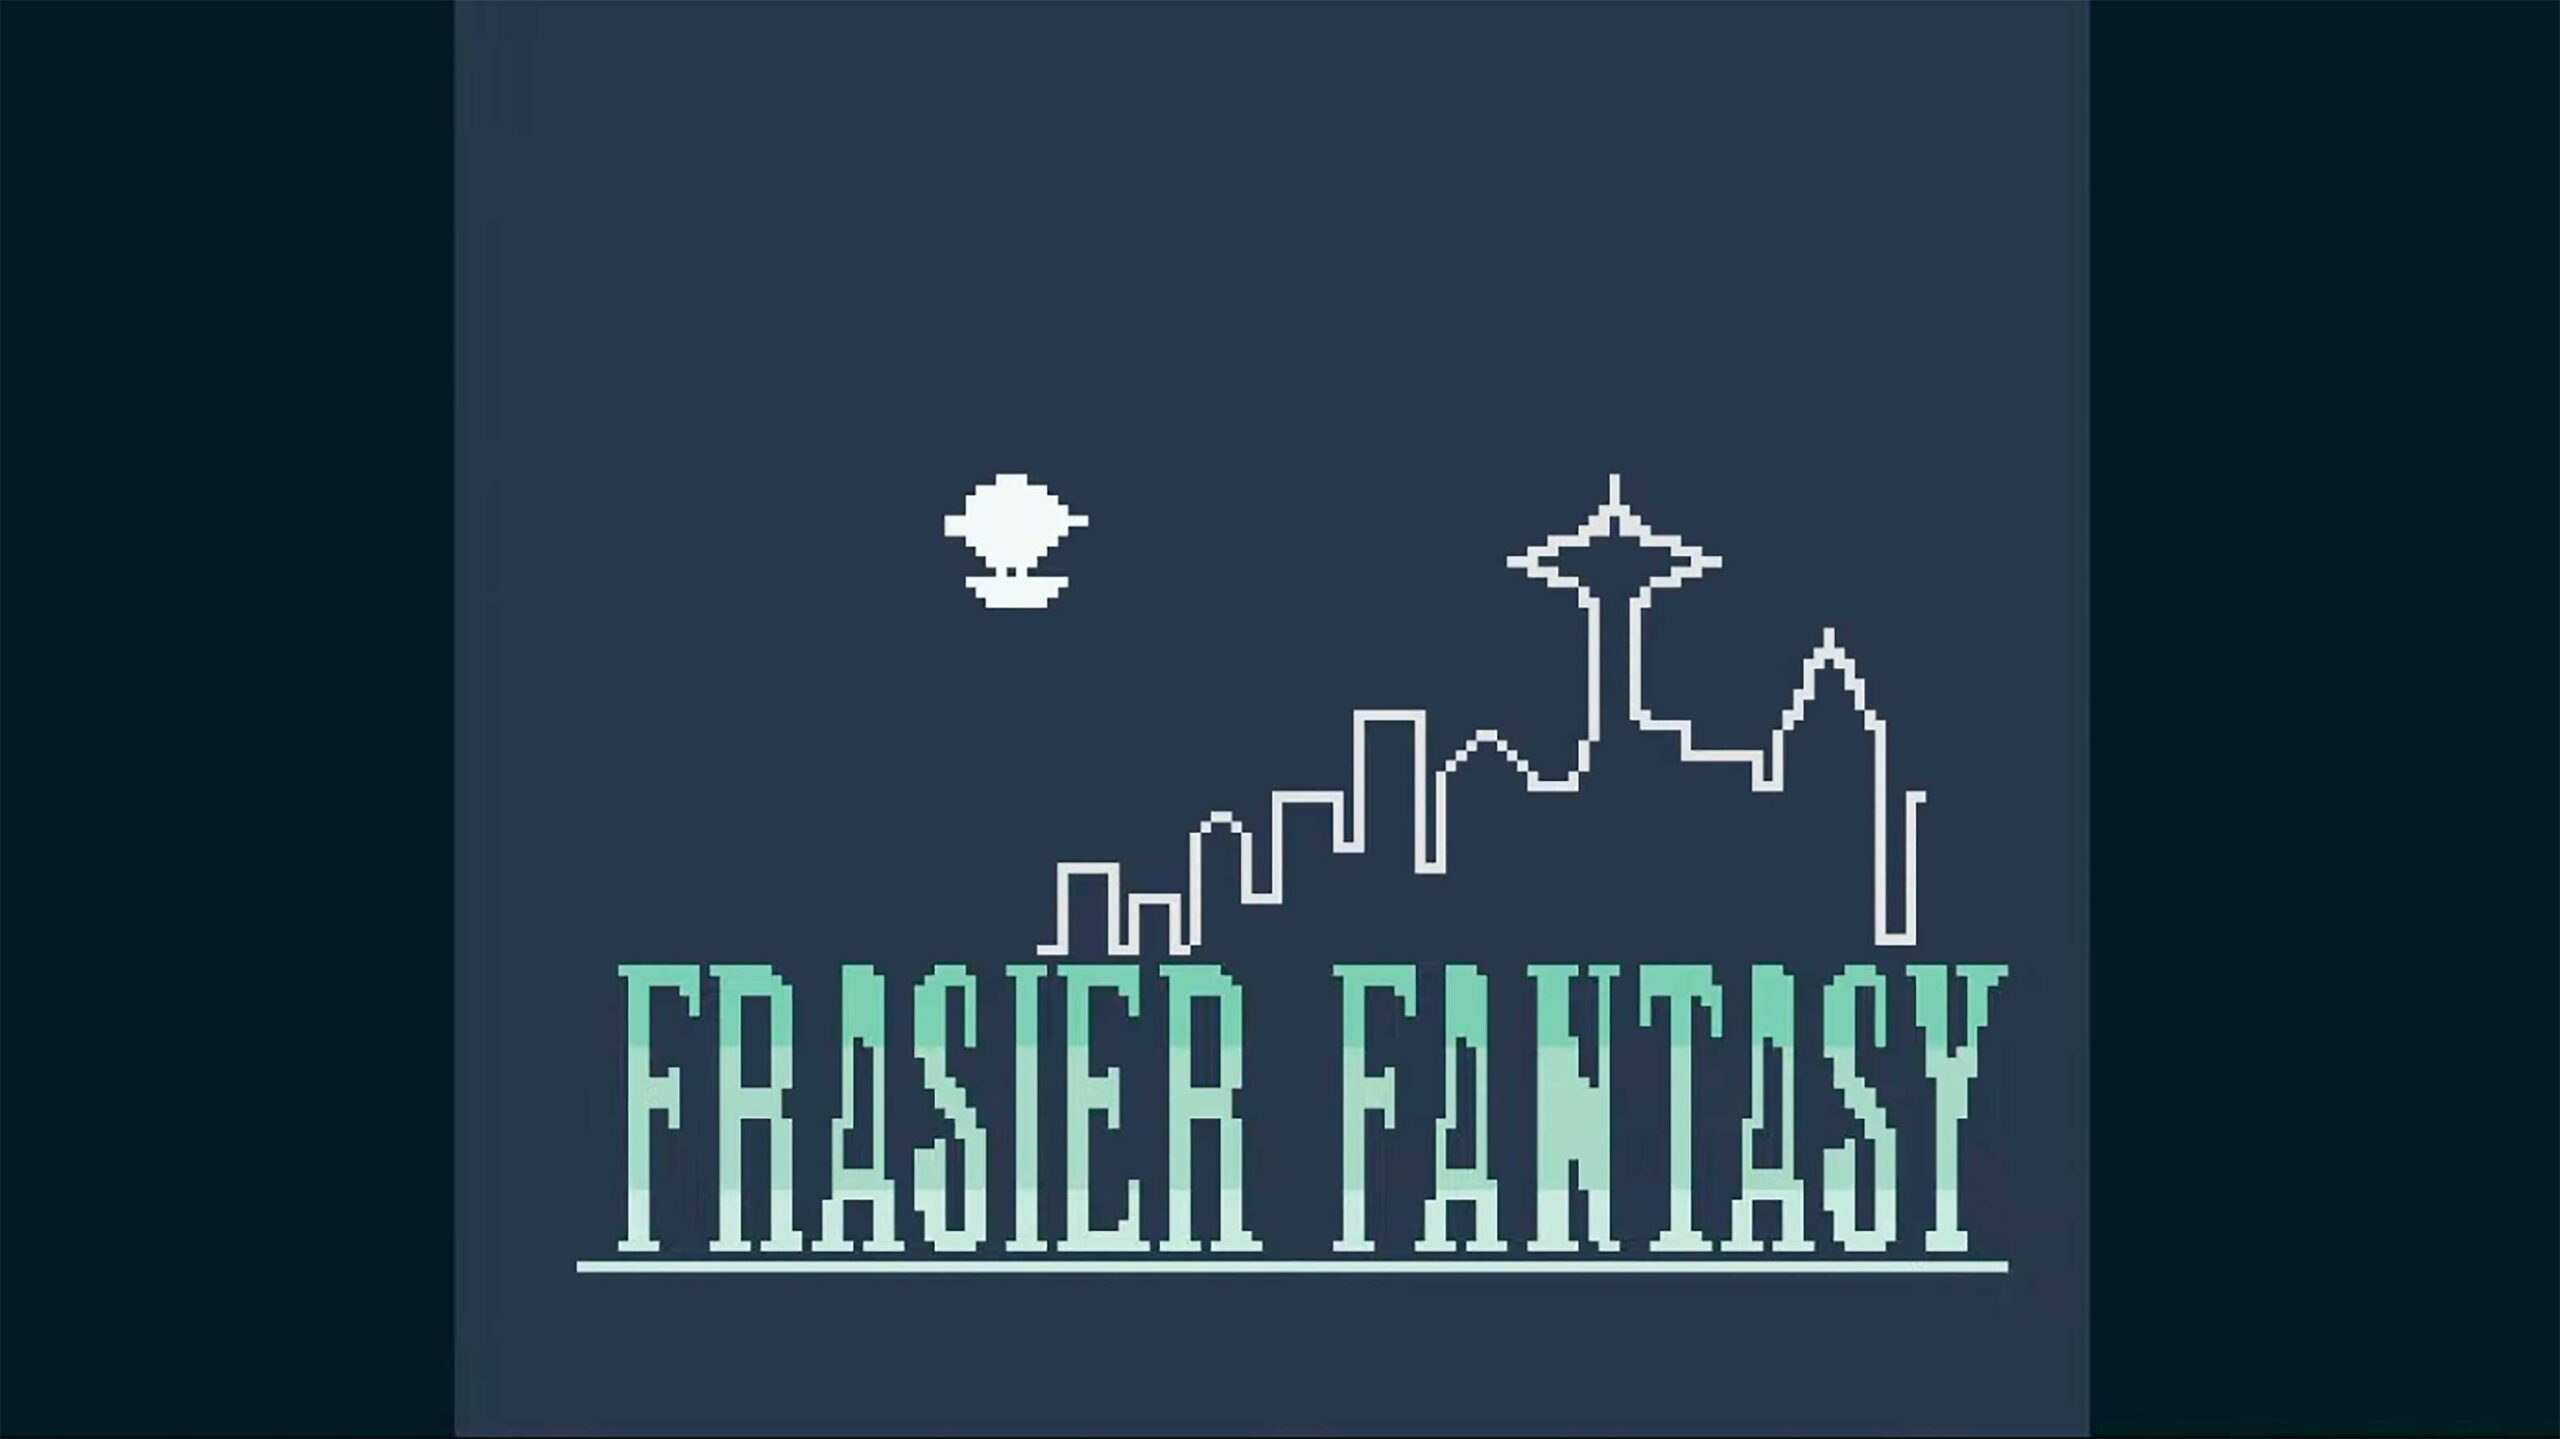 Someone made a Final Fantasy-inspired Frasier game